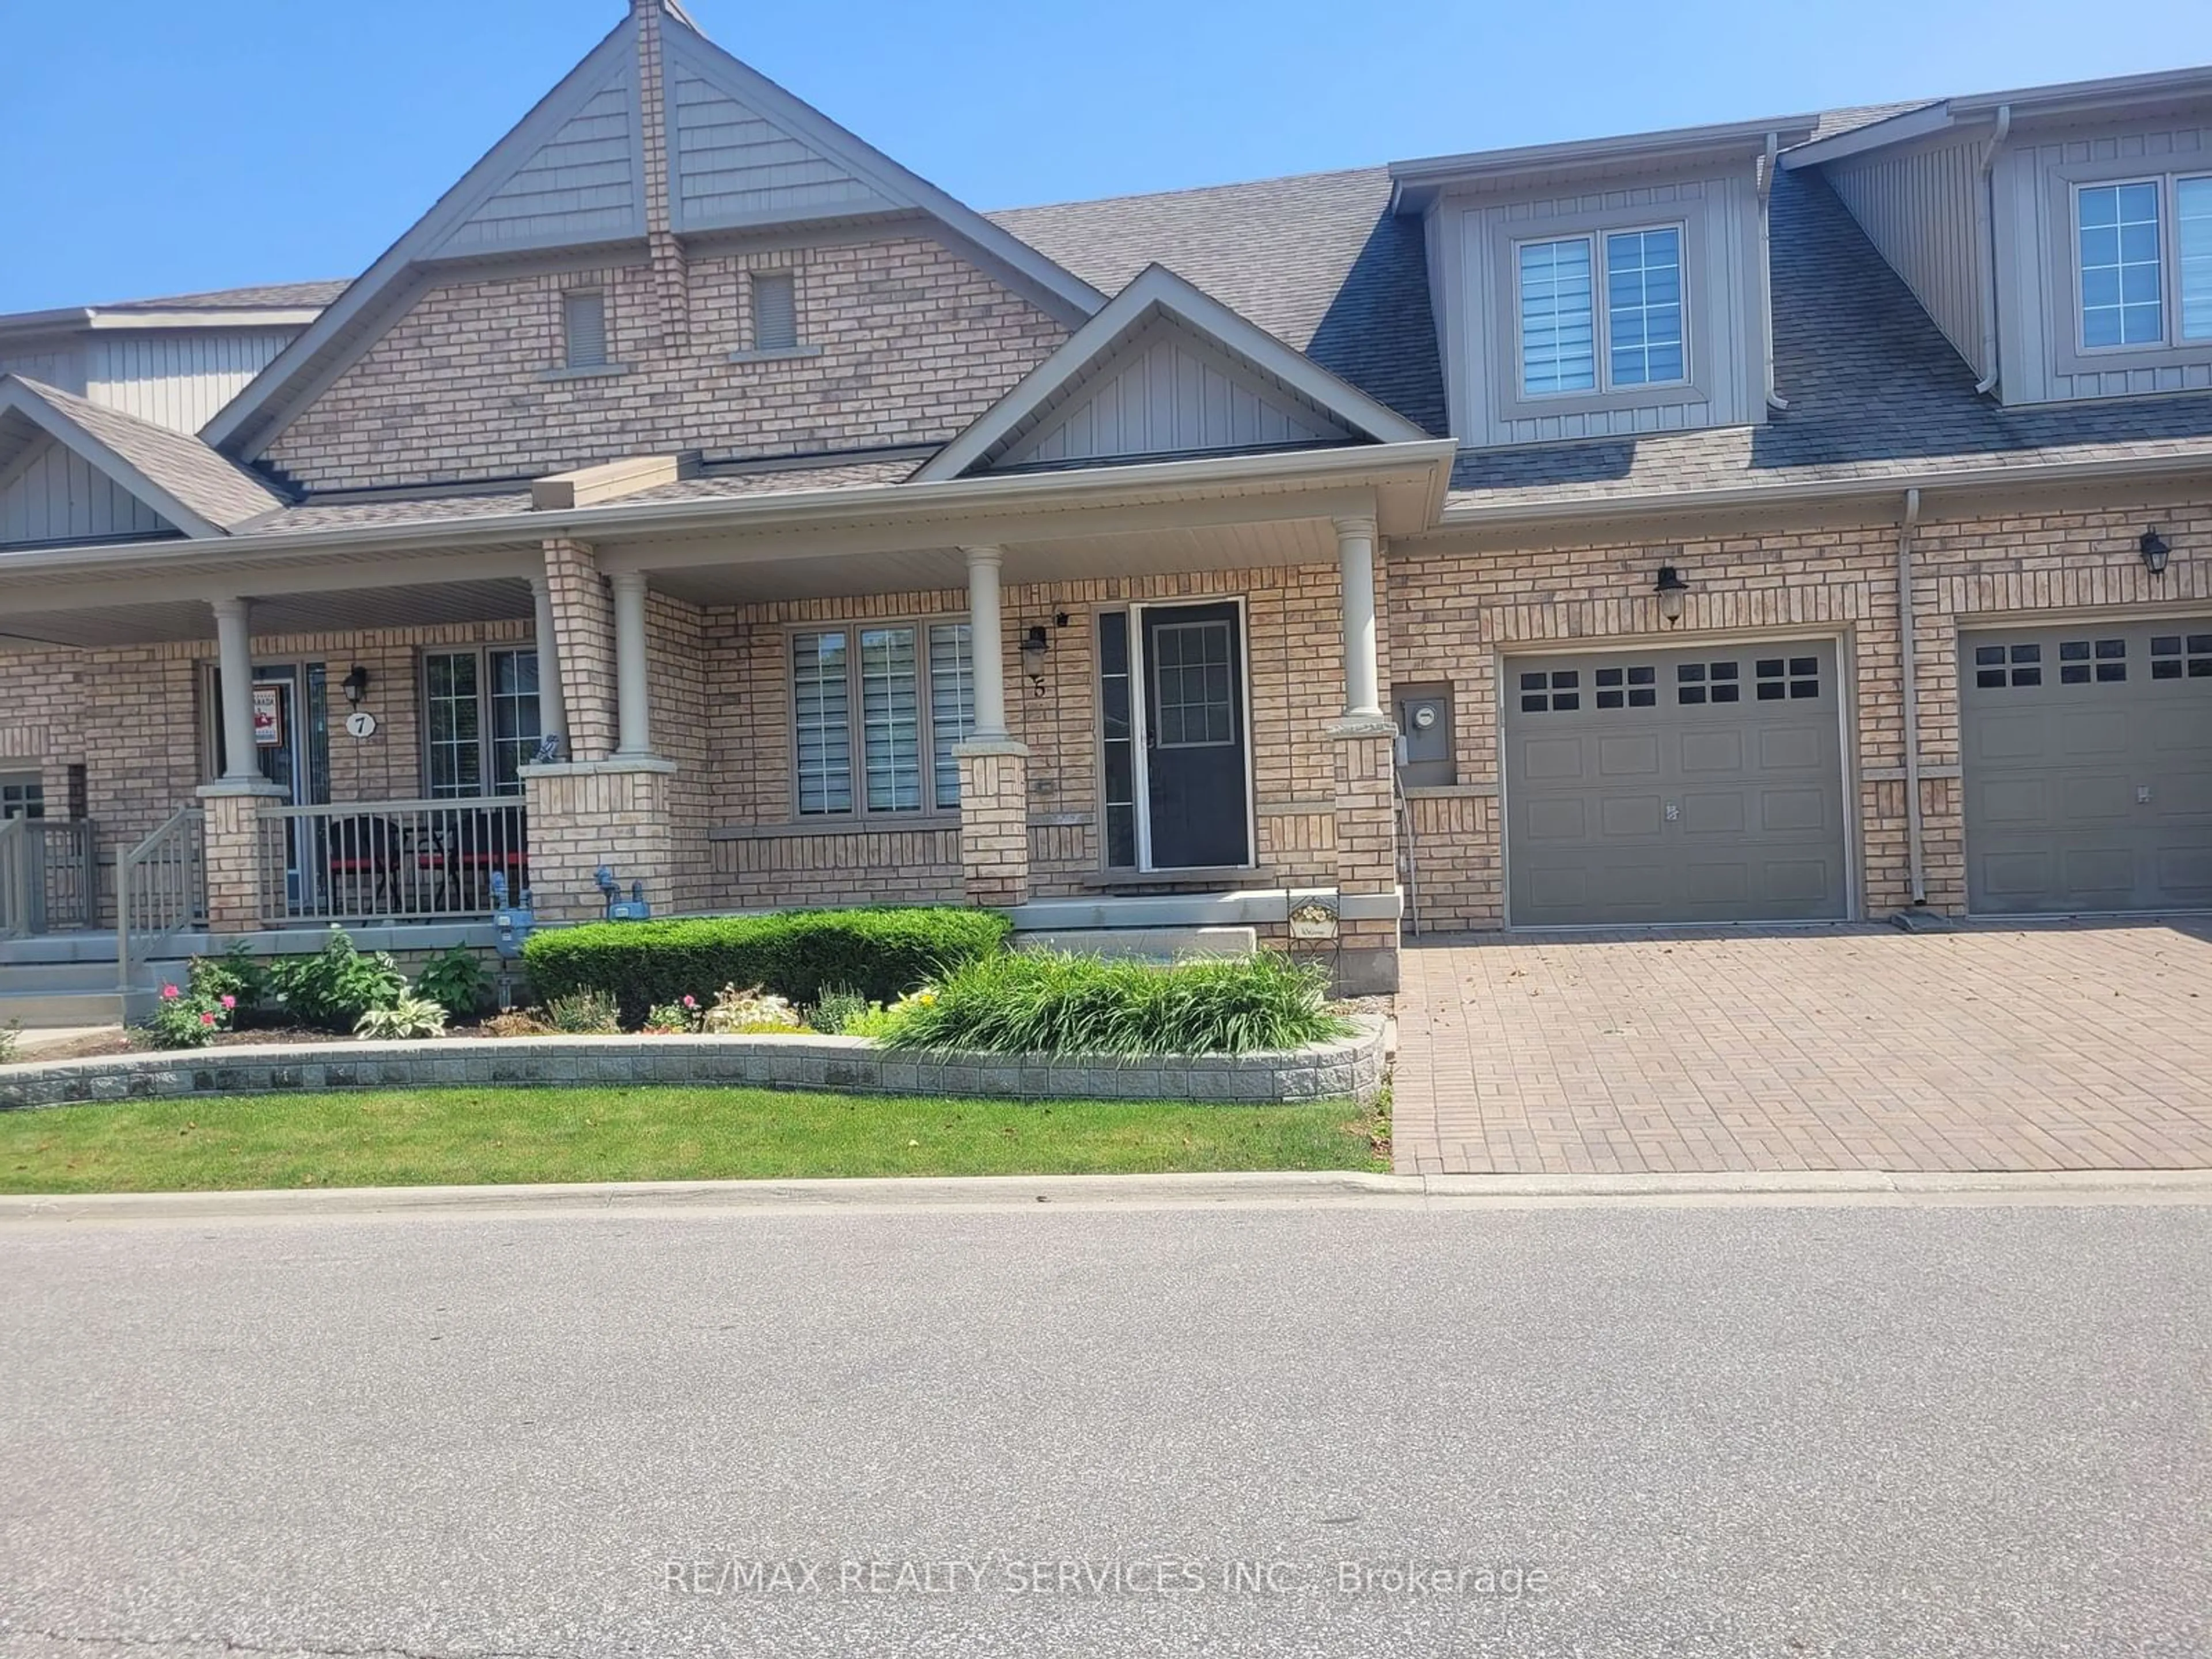 Home with brick exterior material for 5 Lacorra Way #49, Brampton Ontario L6R 3P2